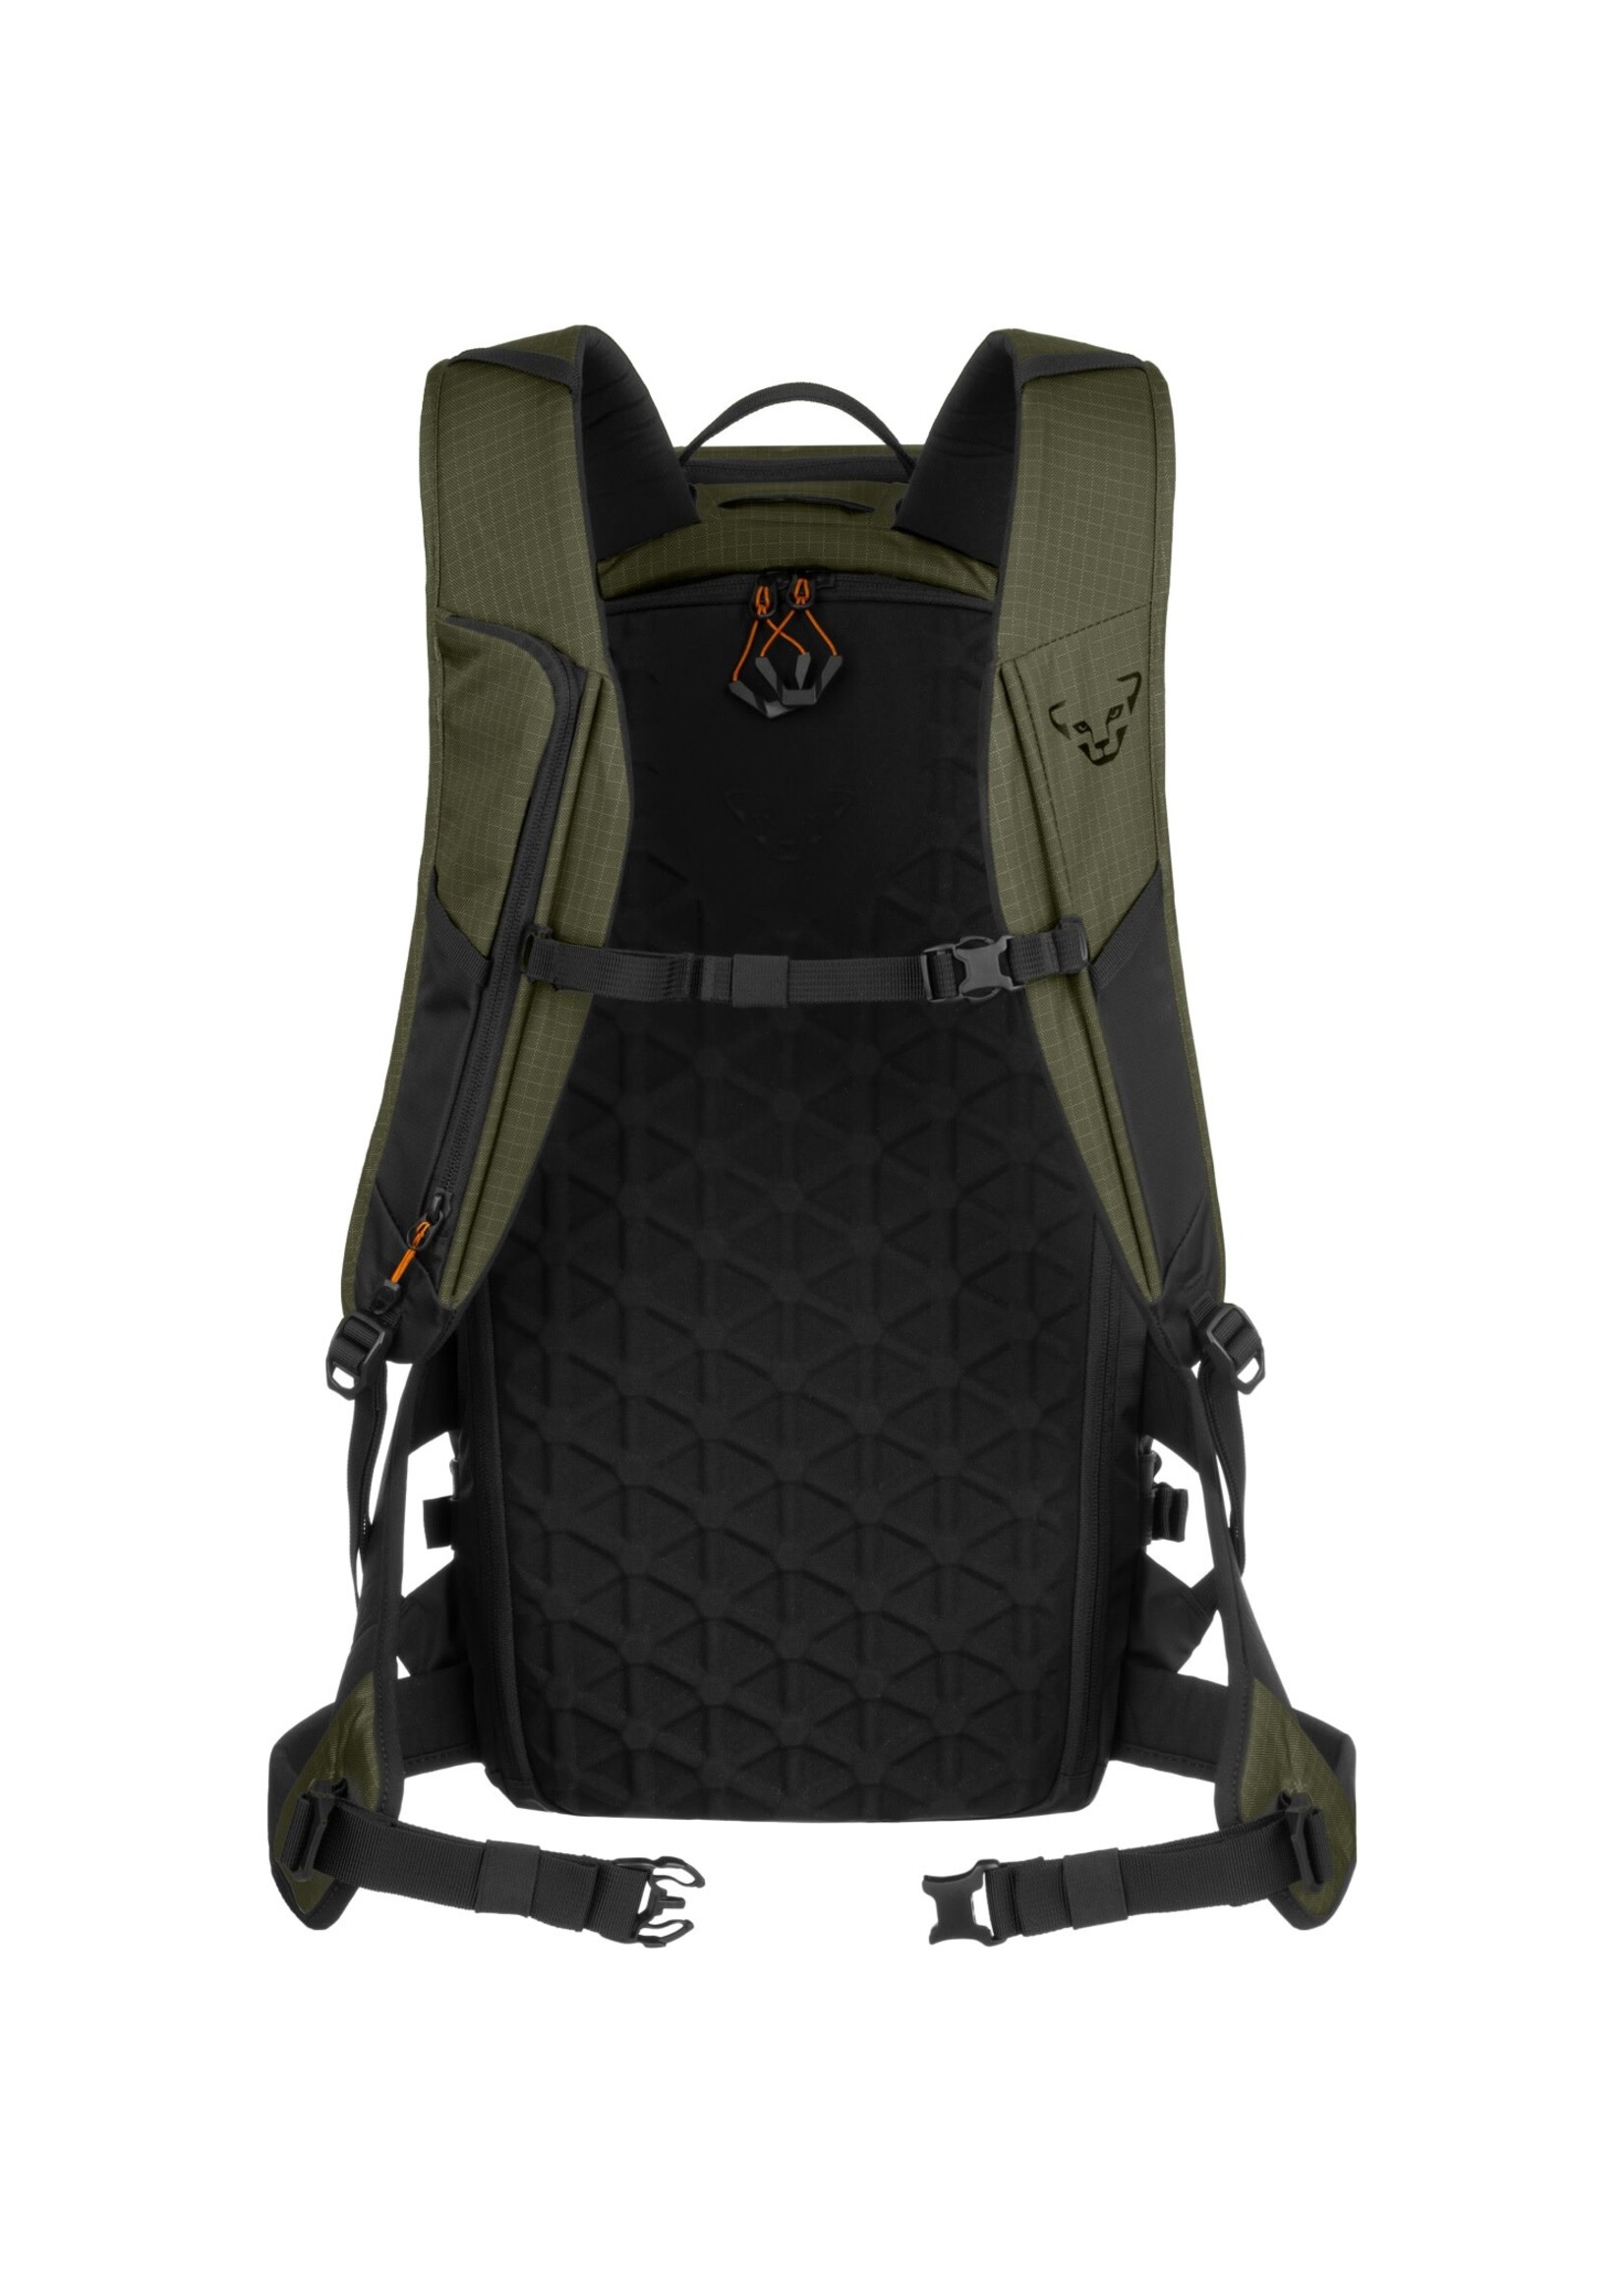 Dynafit Tigard 24 Backpack | Vertical Addiction - Vertical Addiction